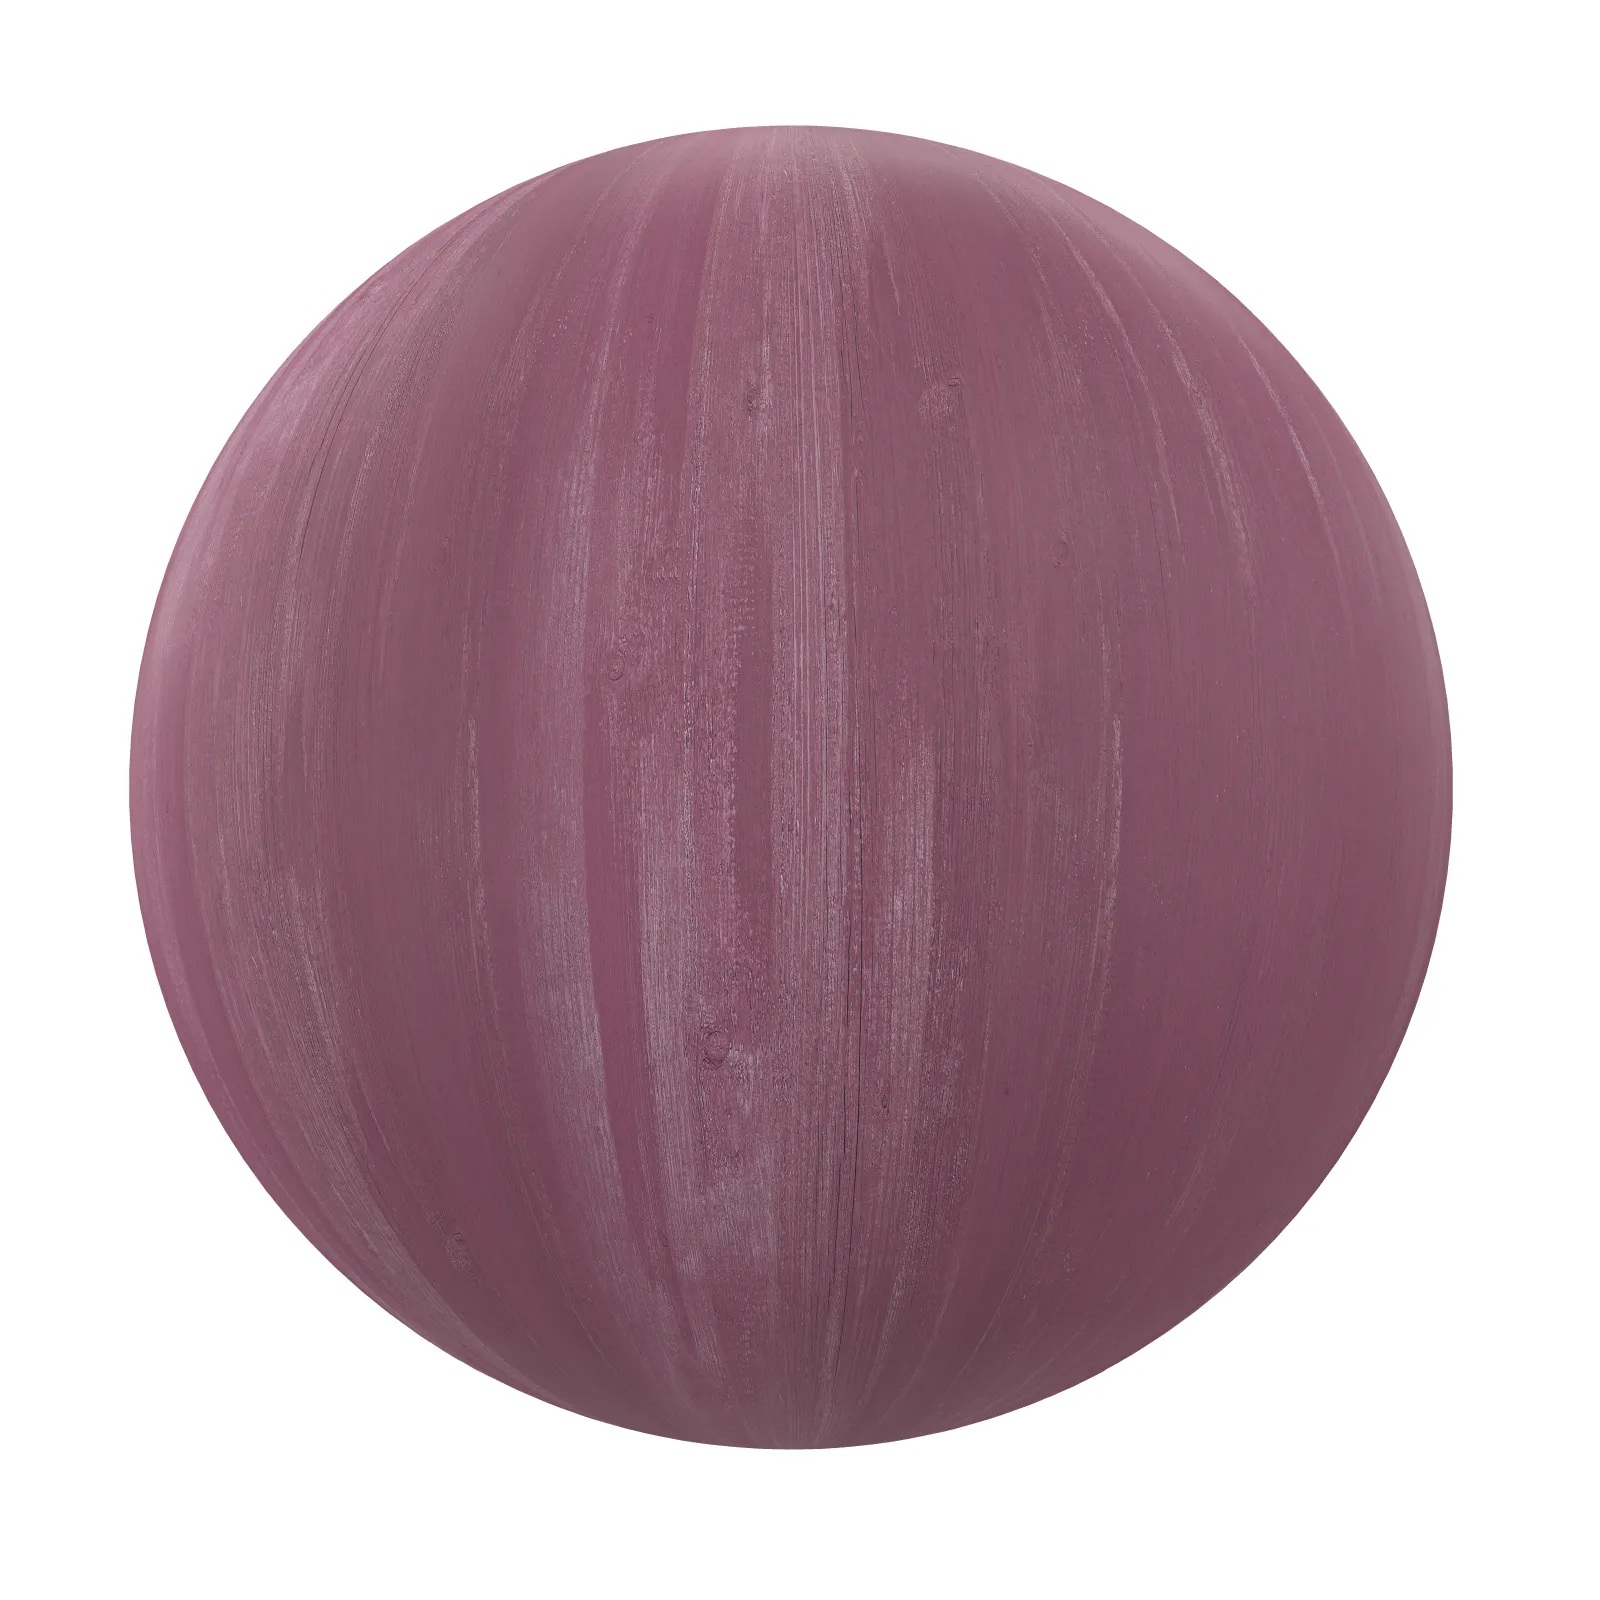 TEXTURES – WOOD – Purple Painted Wood